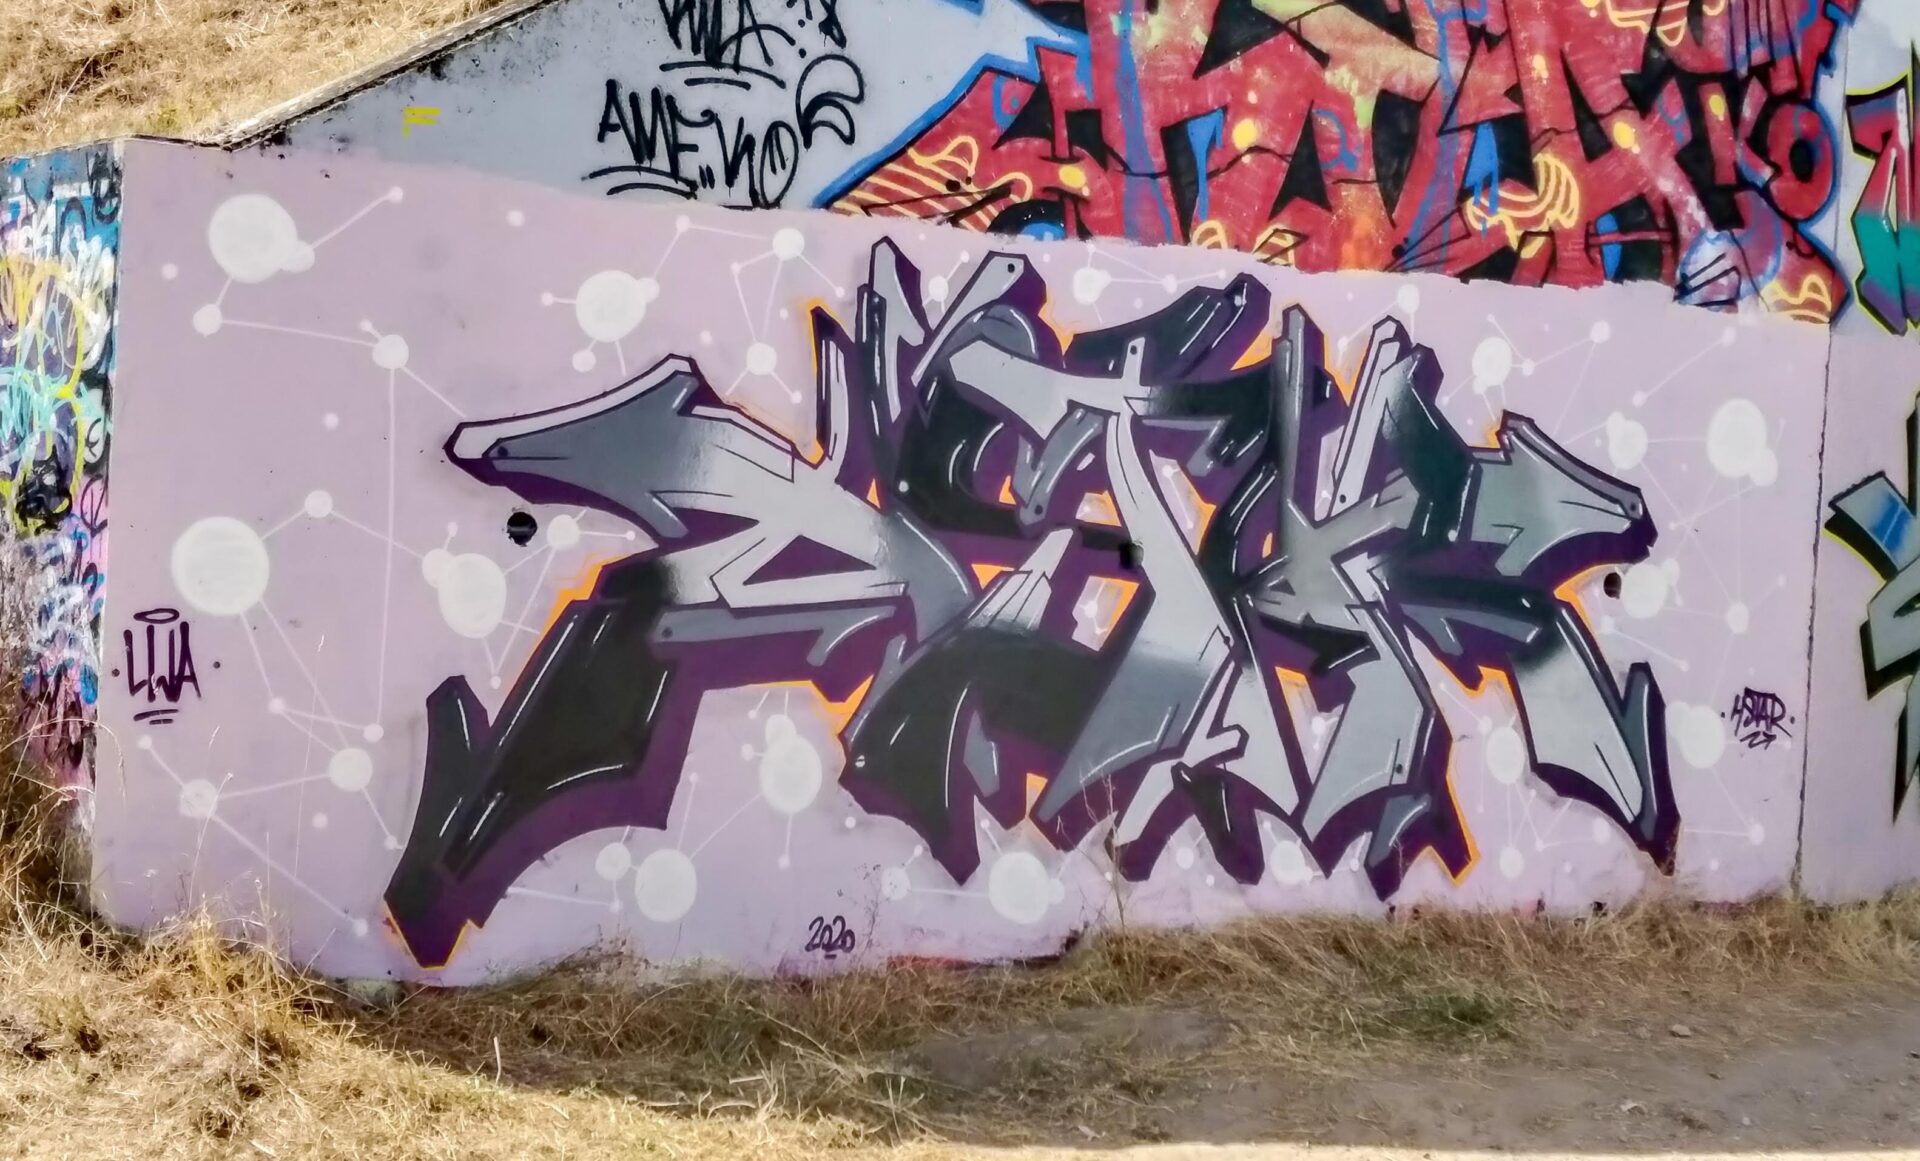 Wall-Graffiti-5